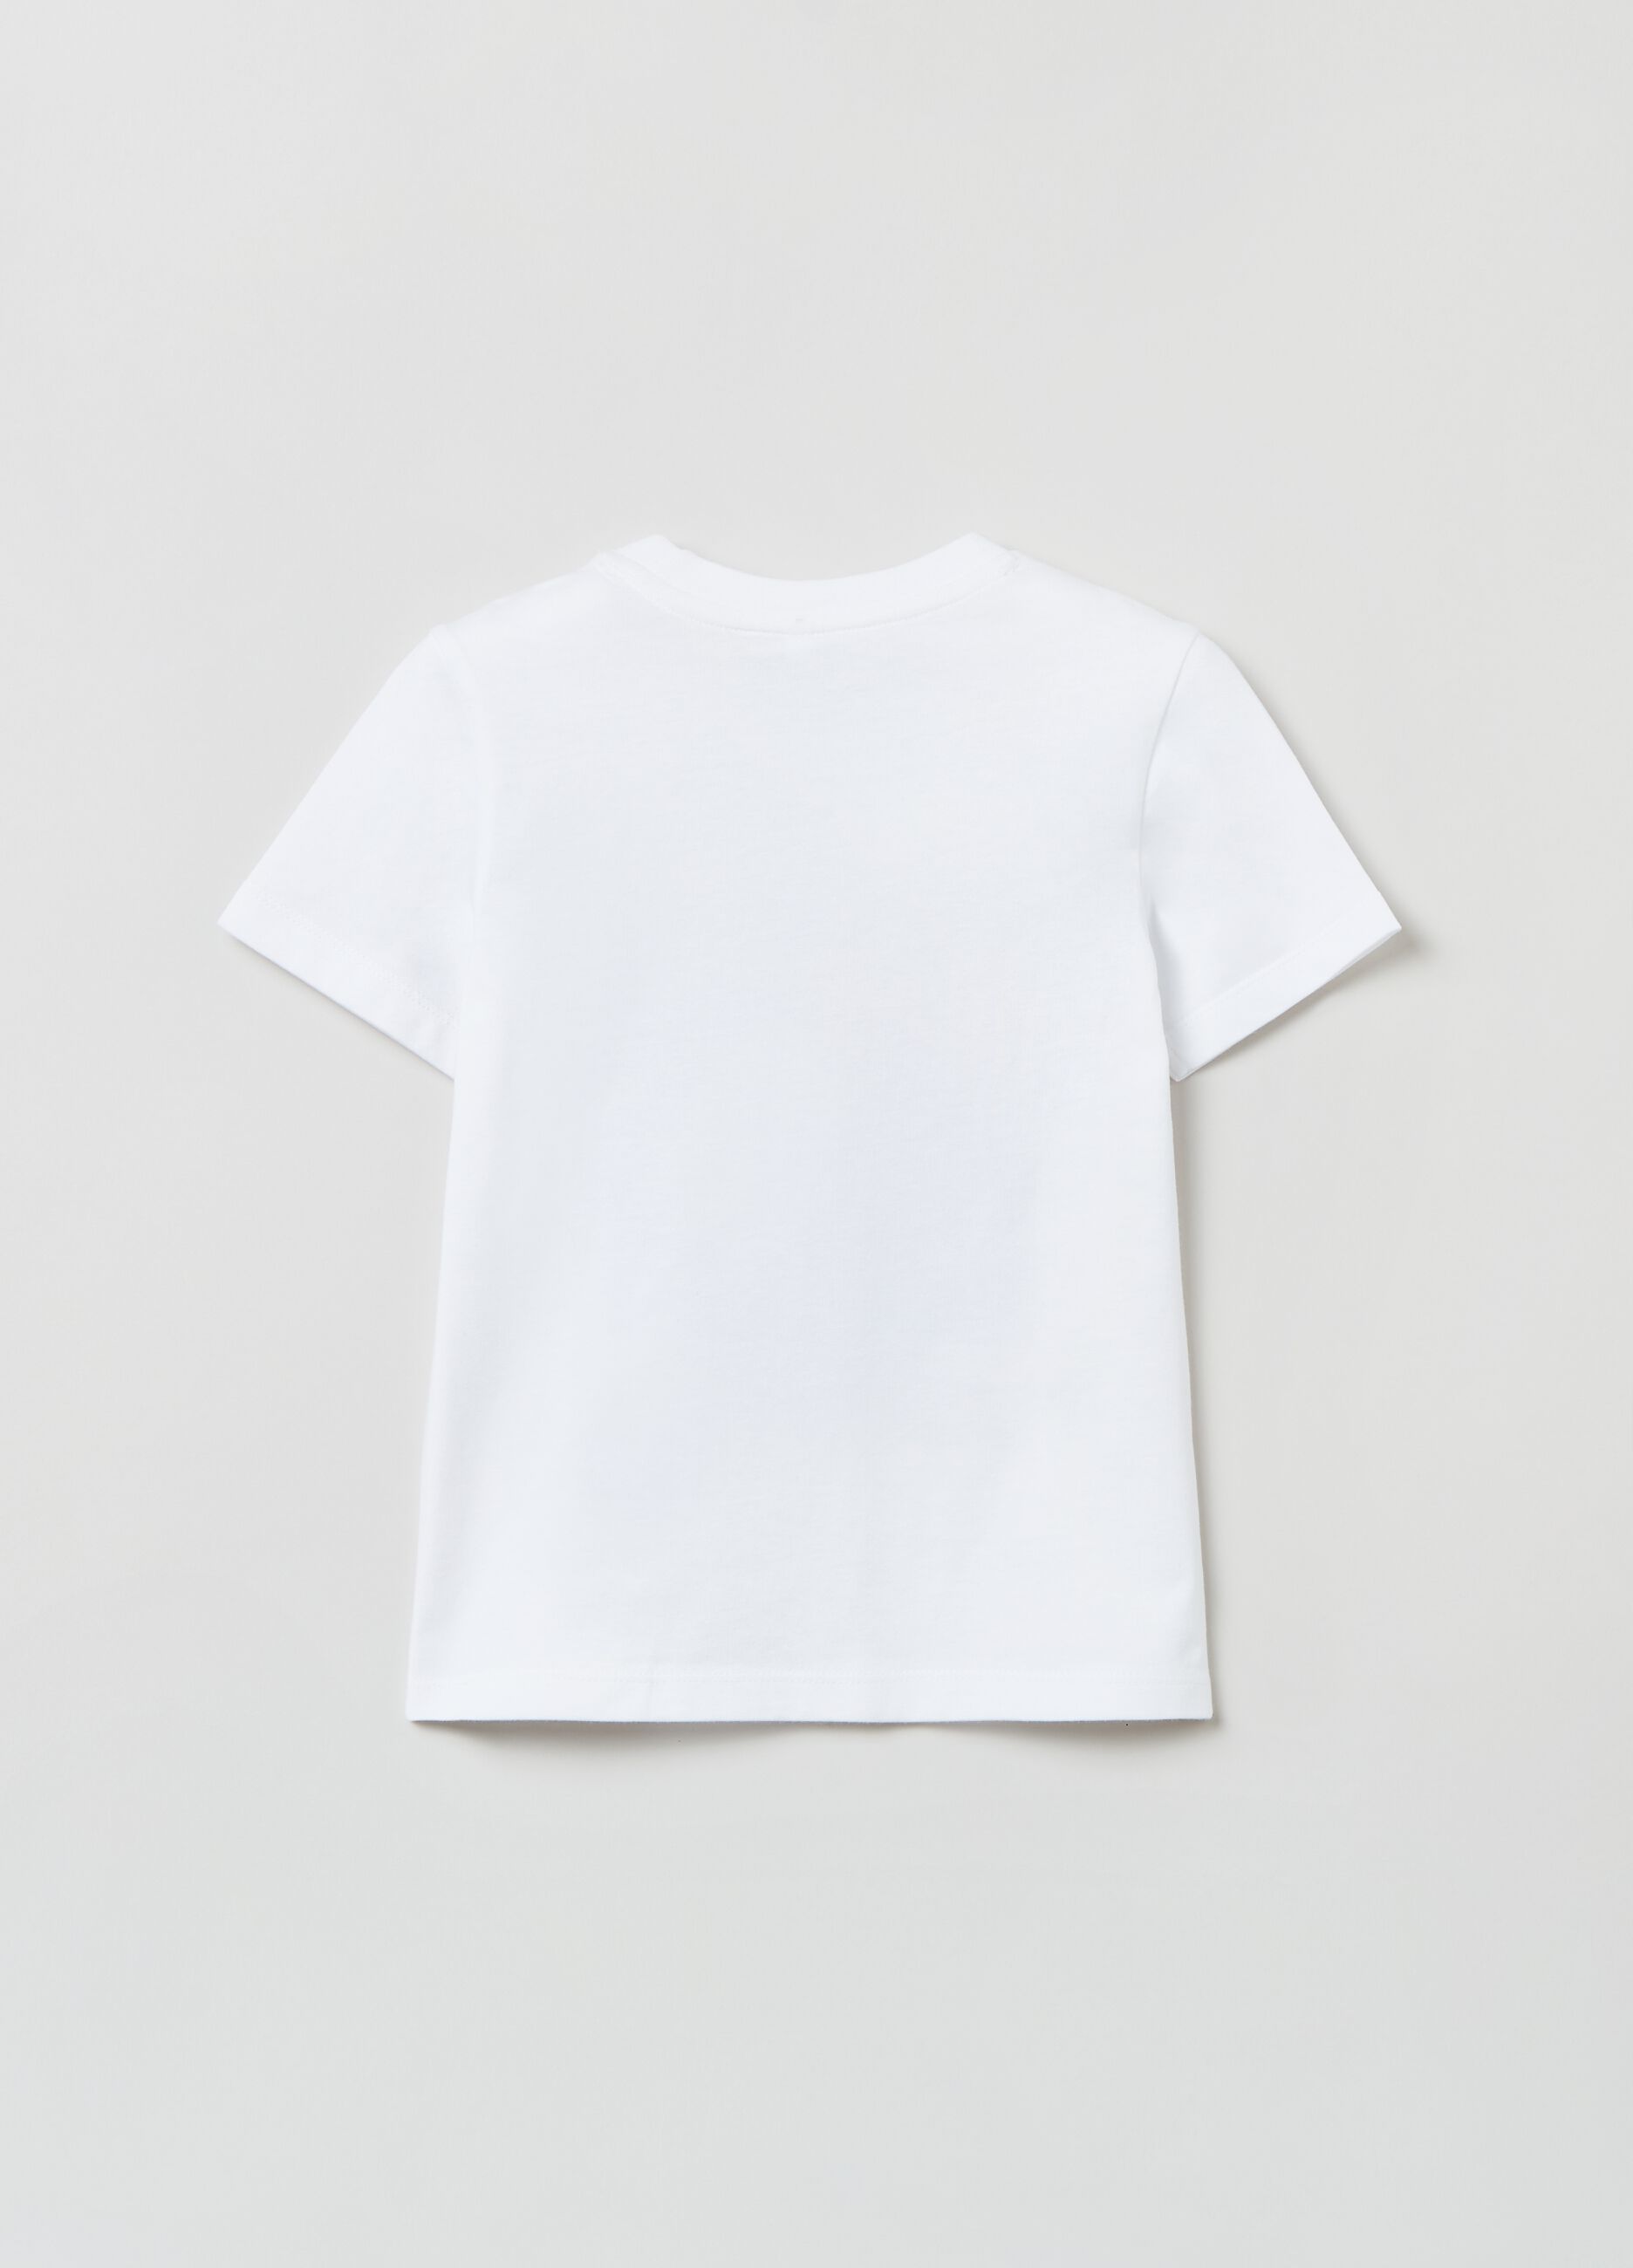 Camiseta de algodón estampado Dragon Ball Z